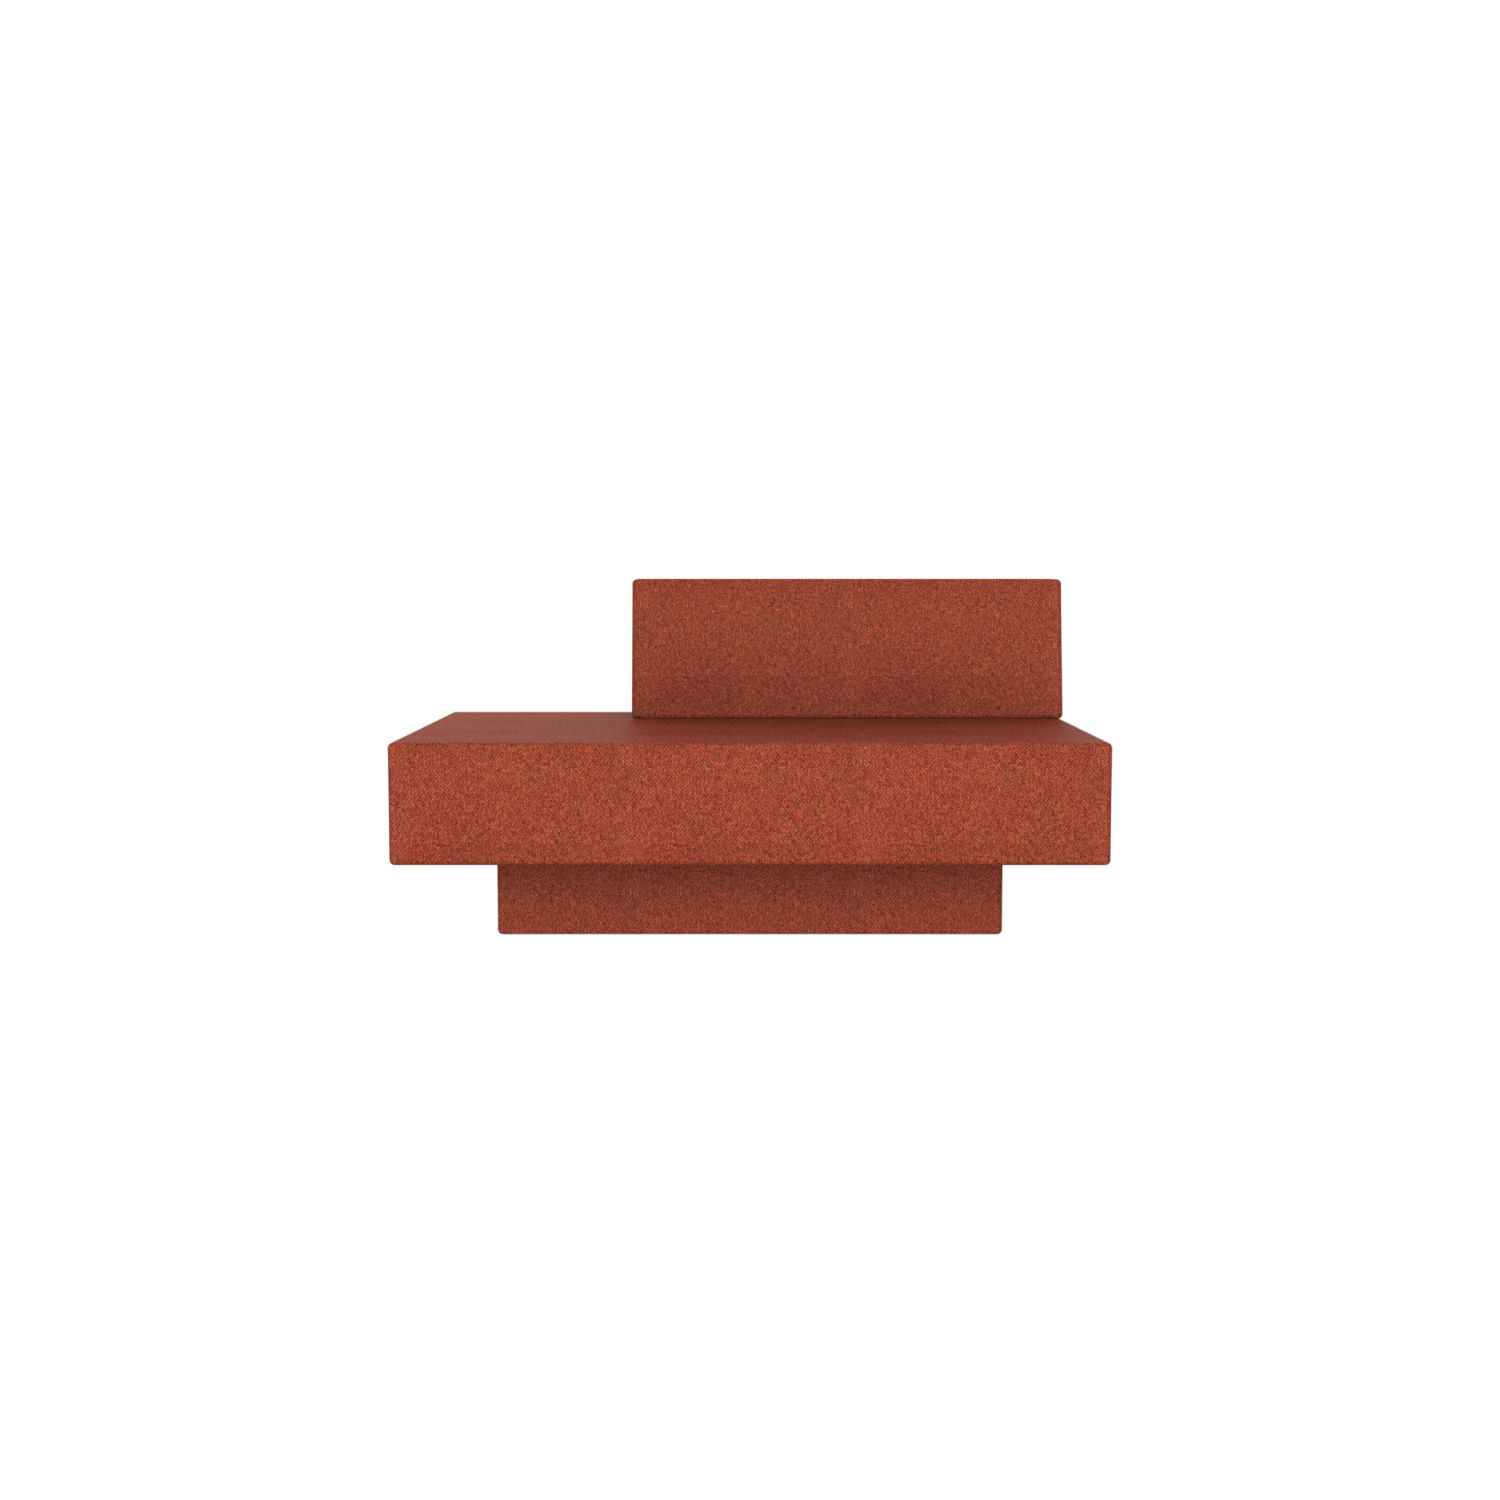 lensvelt atelier van lieshout glyder sofa with sliding backrest 85 x 135 cm moss clay brown 65 price level 2